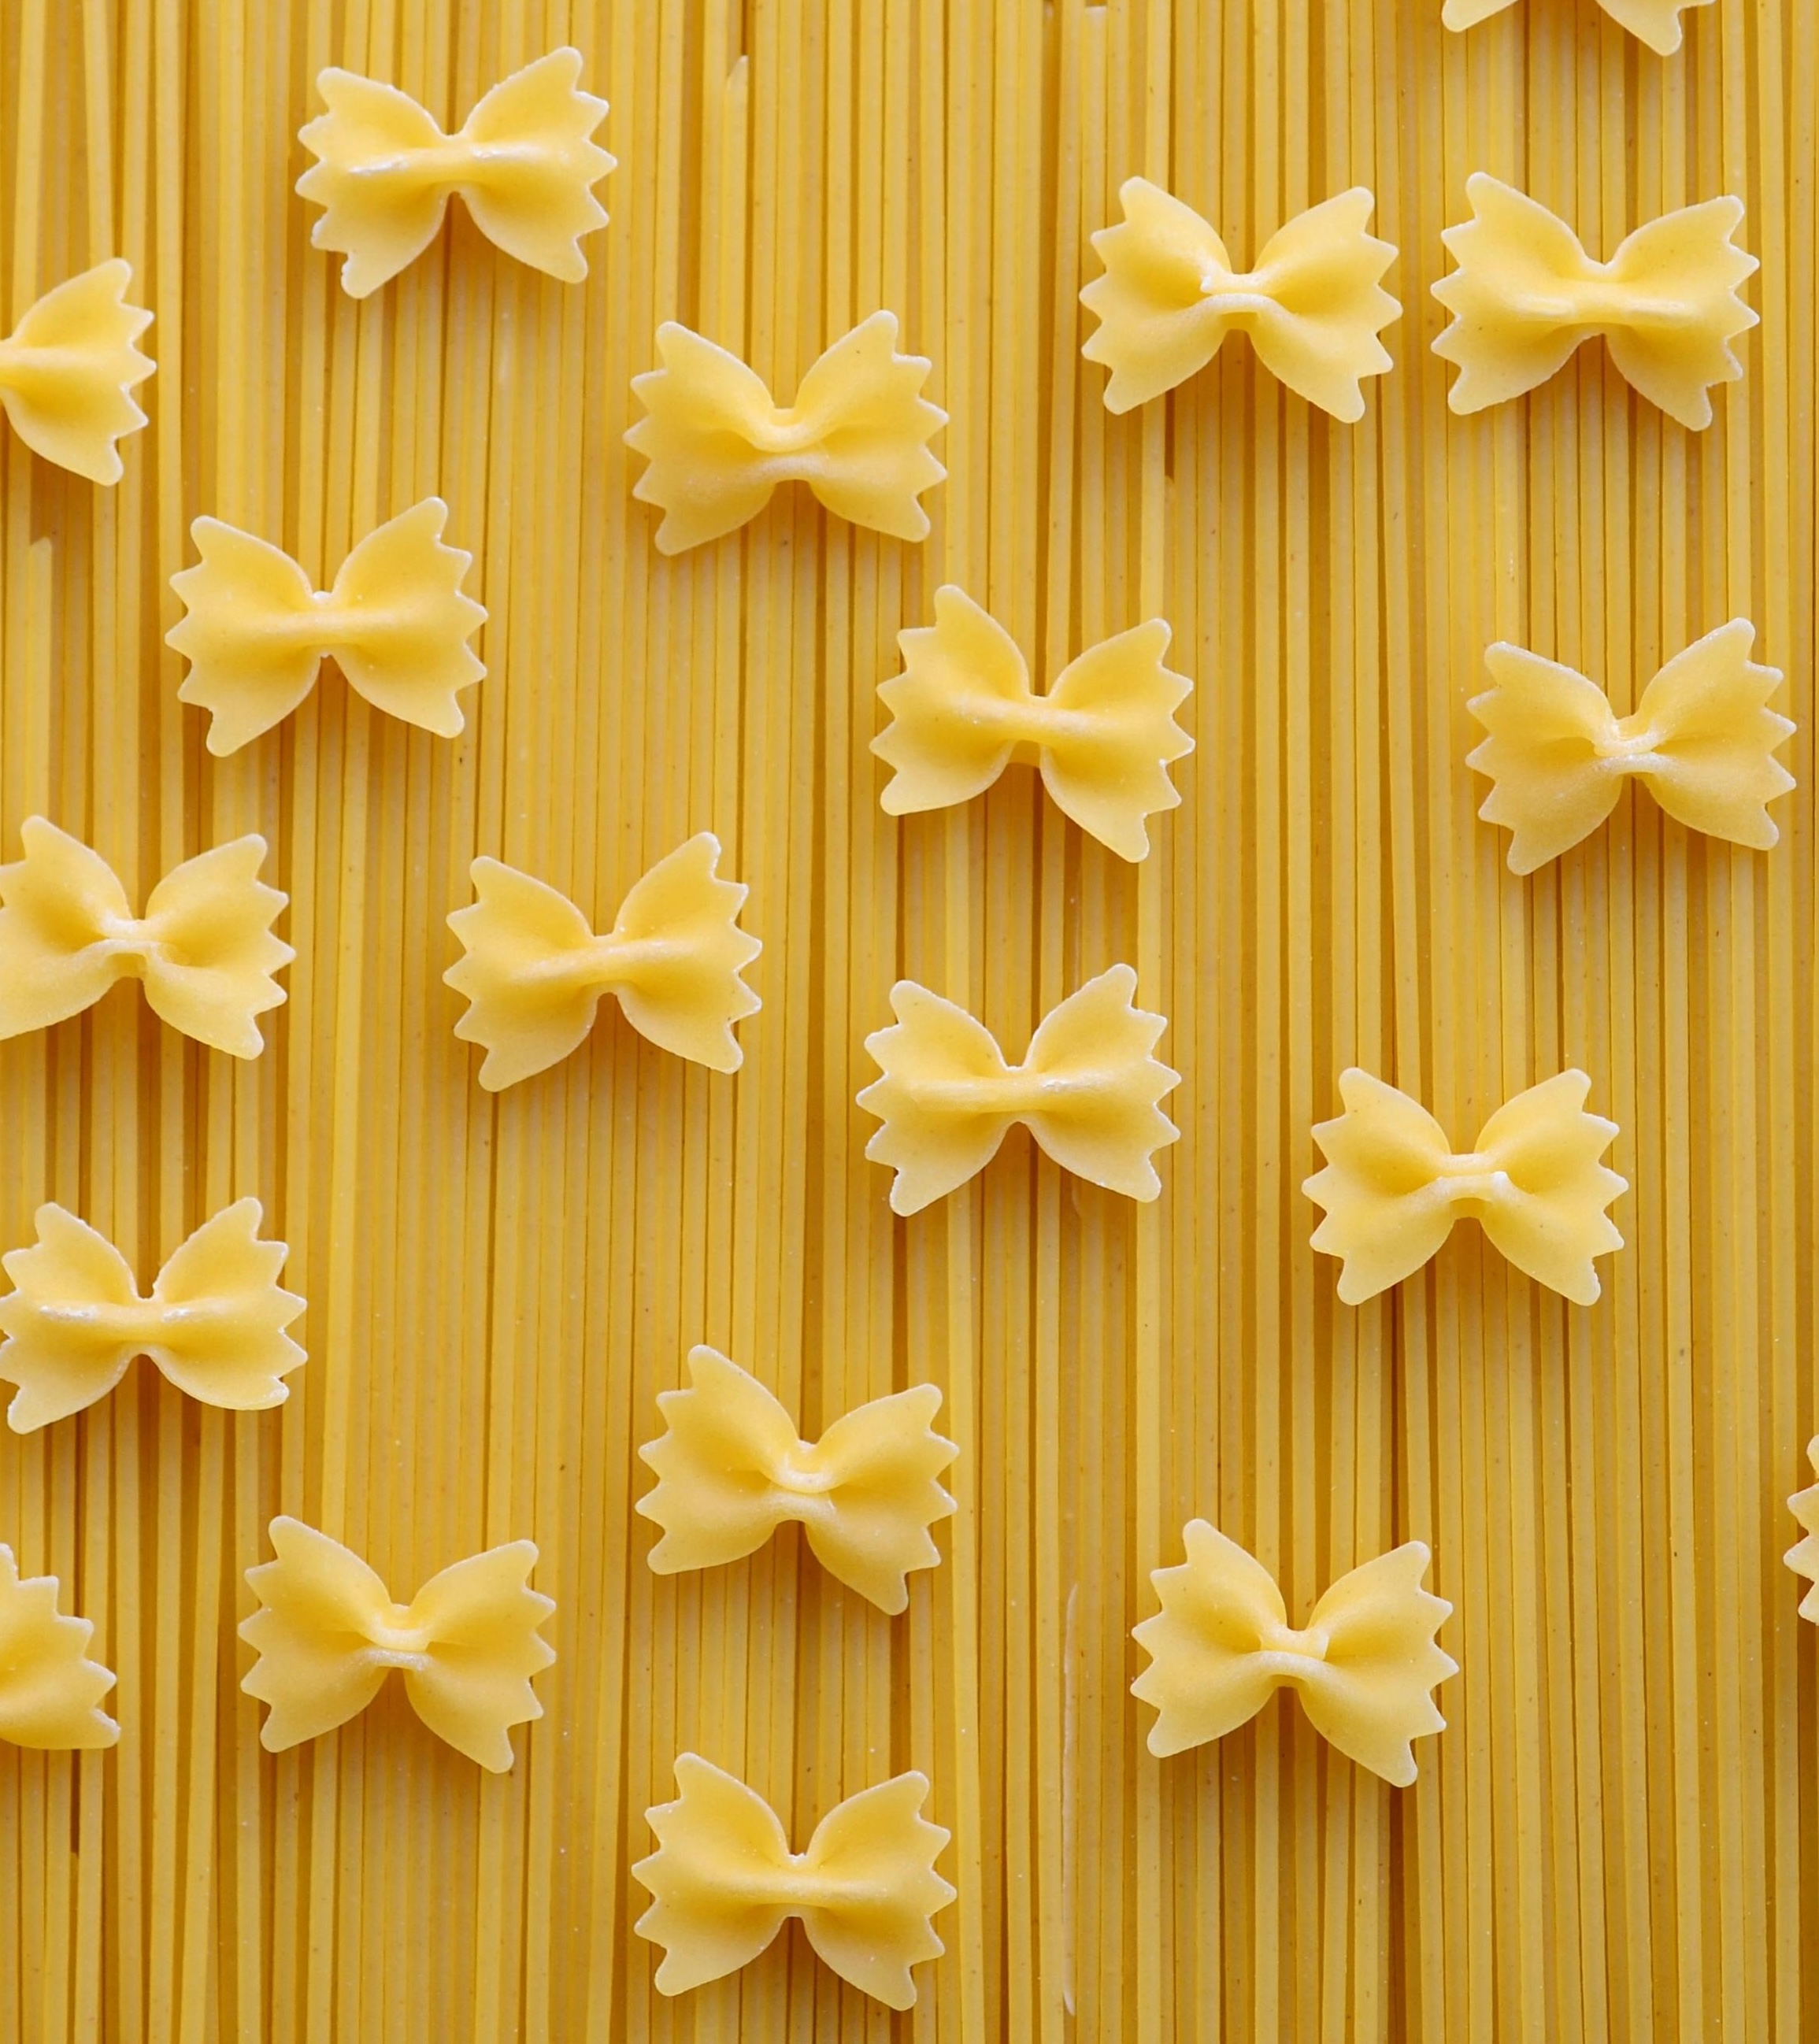 Italian pasta: new advertising rules